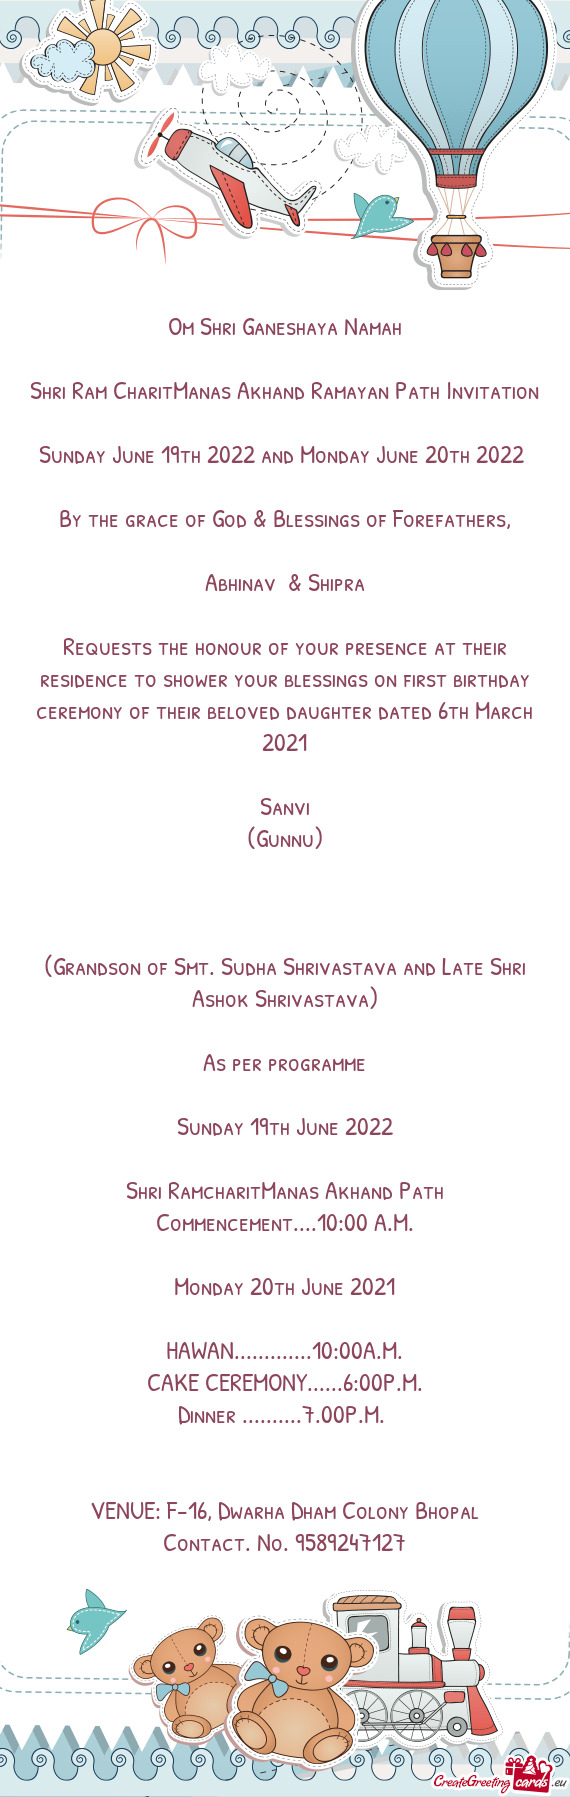 Shri Ram CharitManas Akhand Ramayan Path Invitation